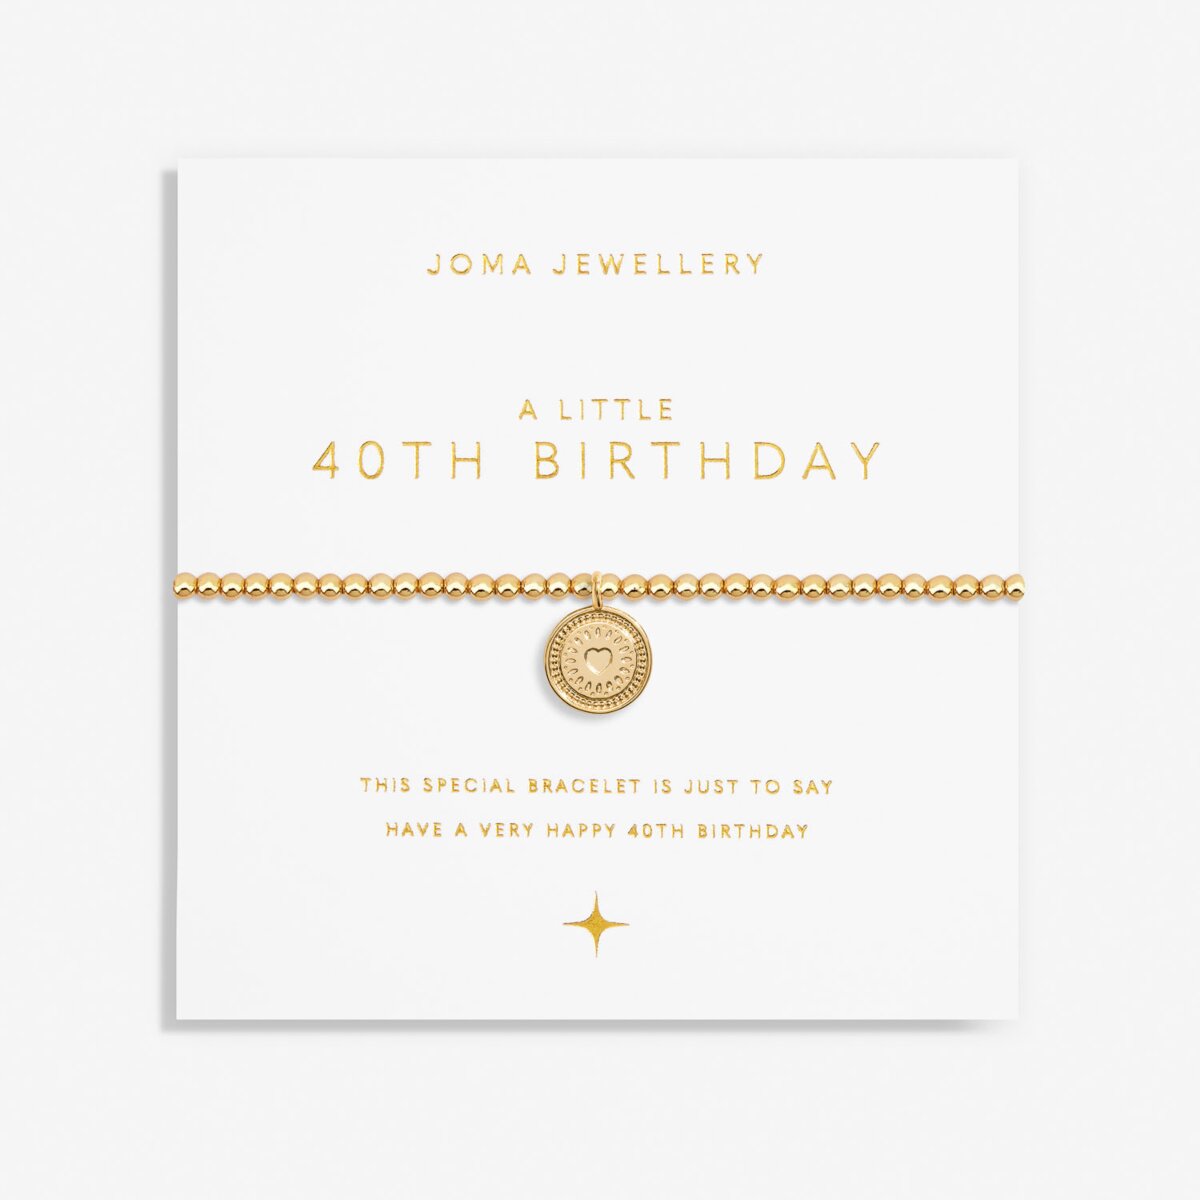 JOMA JEWELLERY | A LITTLE GOLD | 40TH BIRTHDAY BRACELET